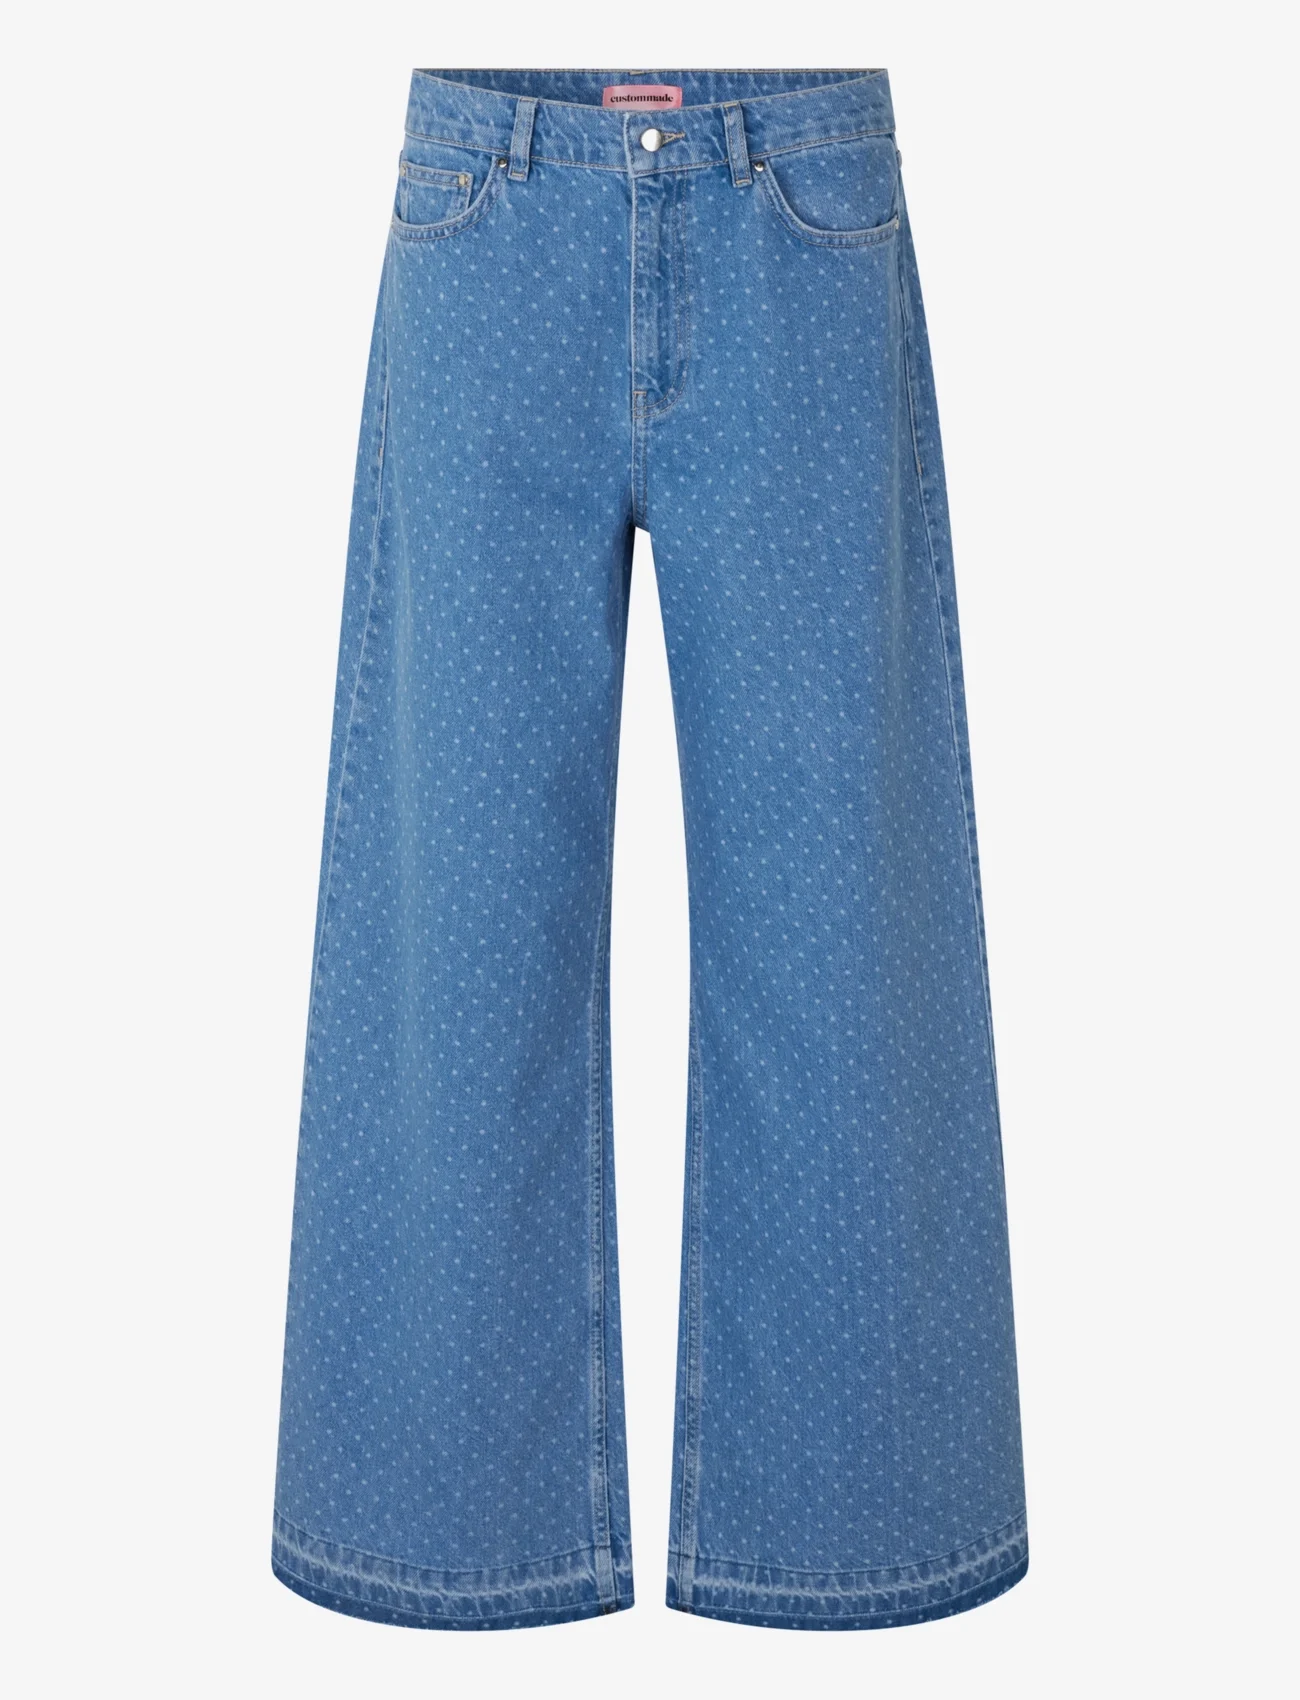 Custommade - Oteca Dots - vida jeans - 414 dusty blue - 0